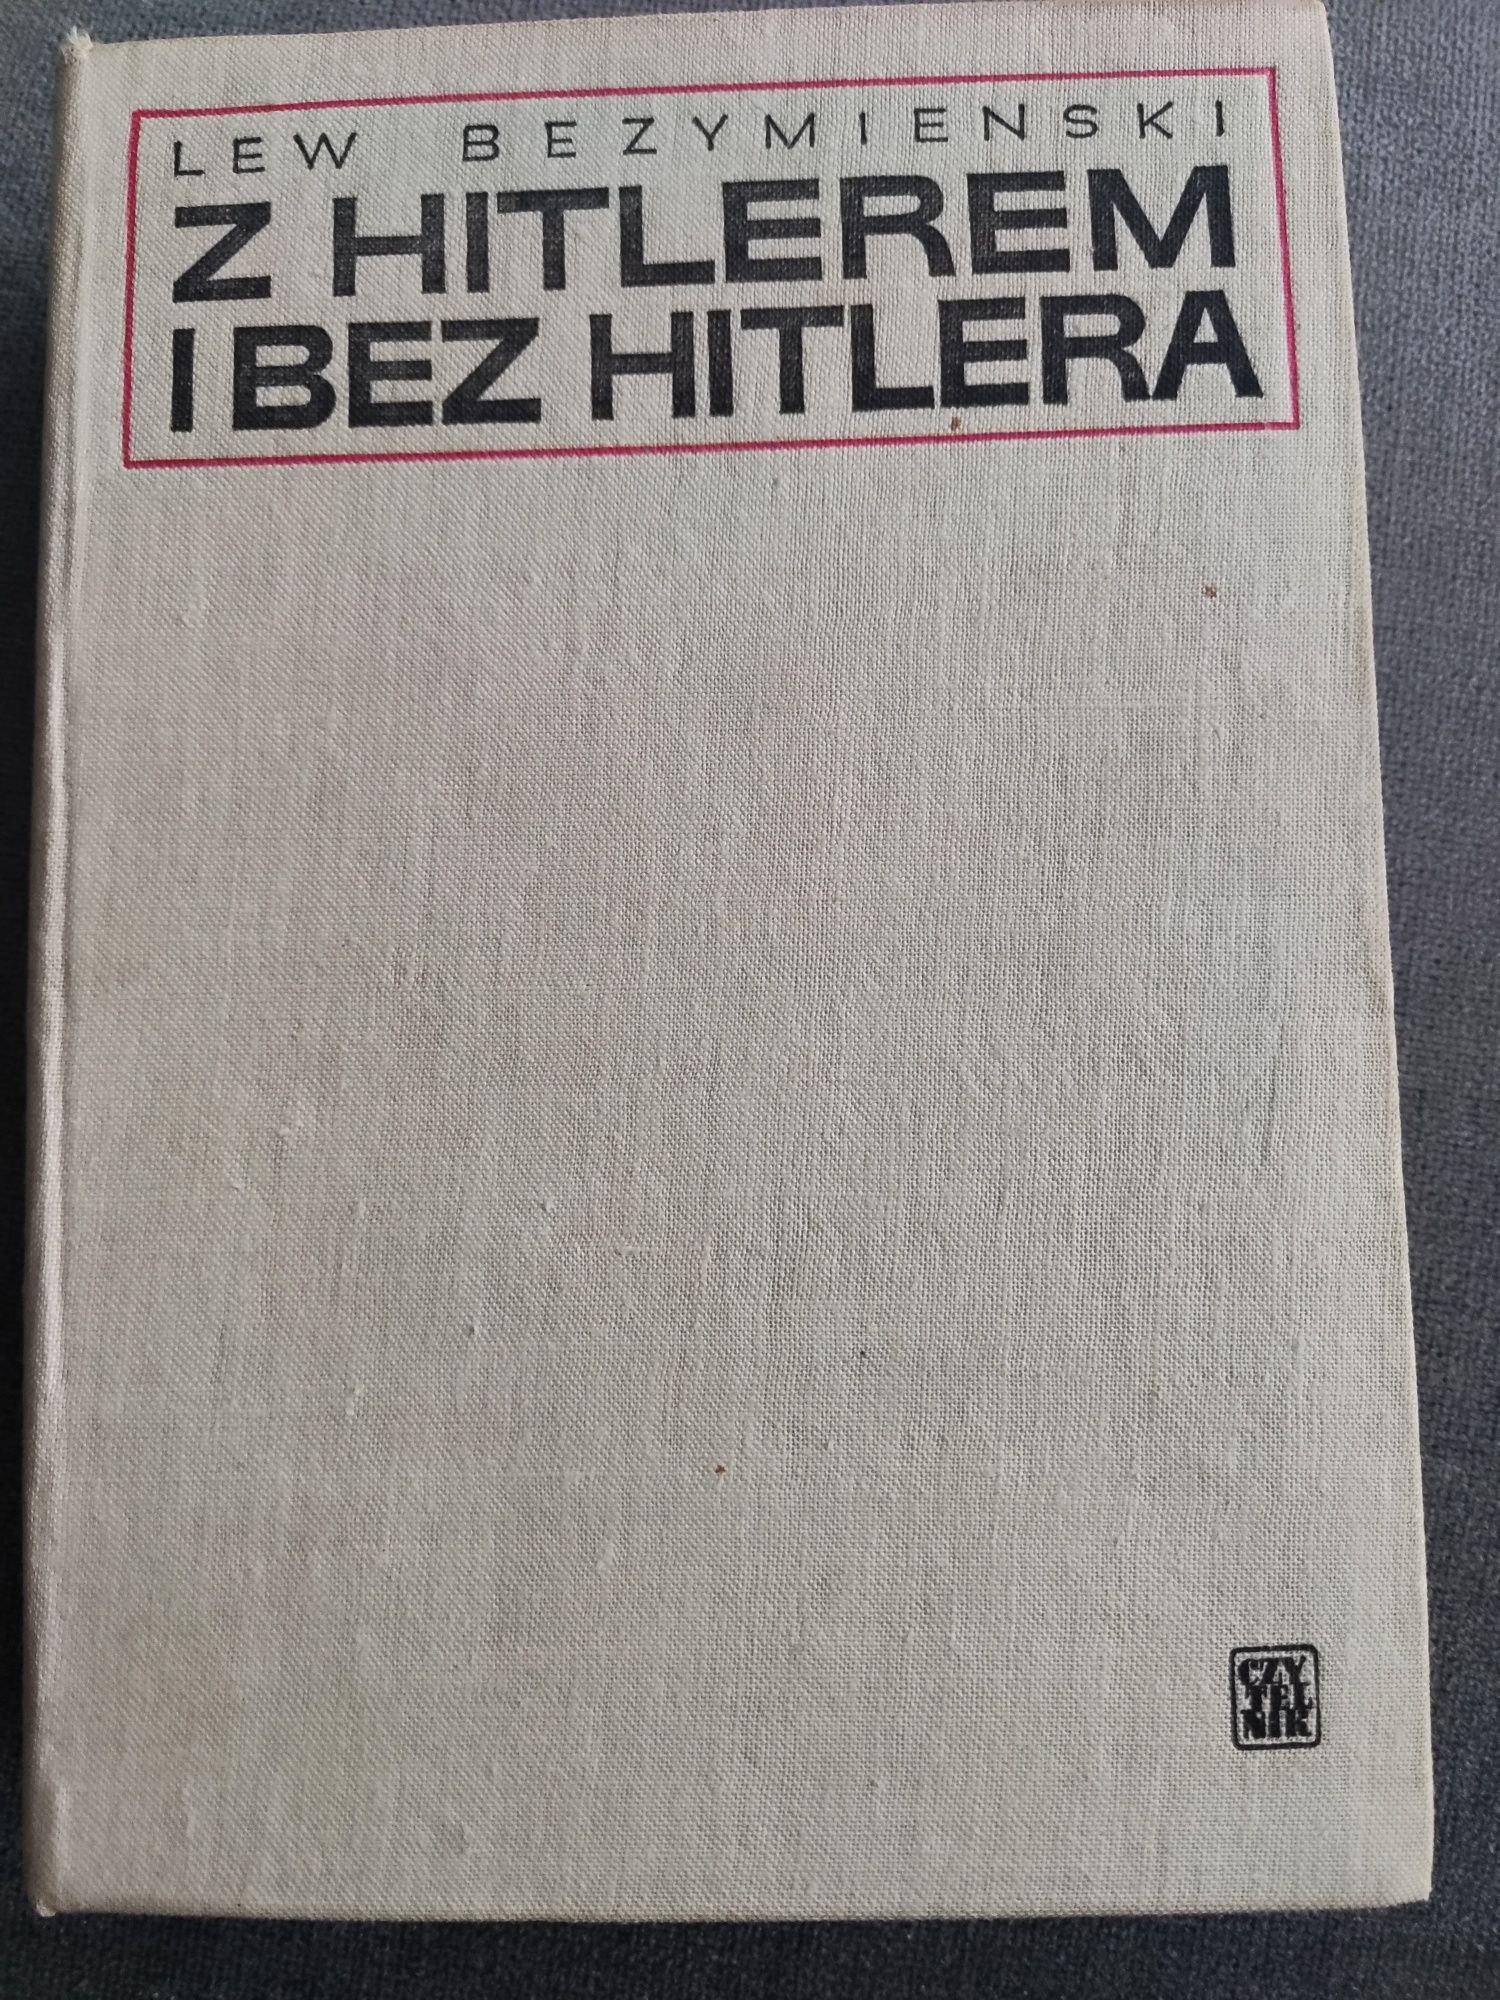 Książka "z Hitlerem i bez Hitlera"